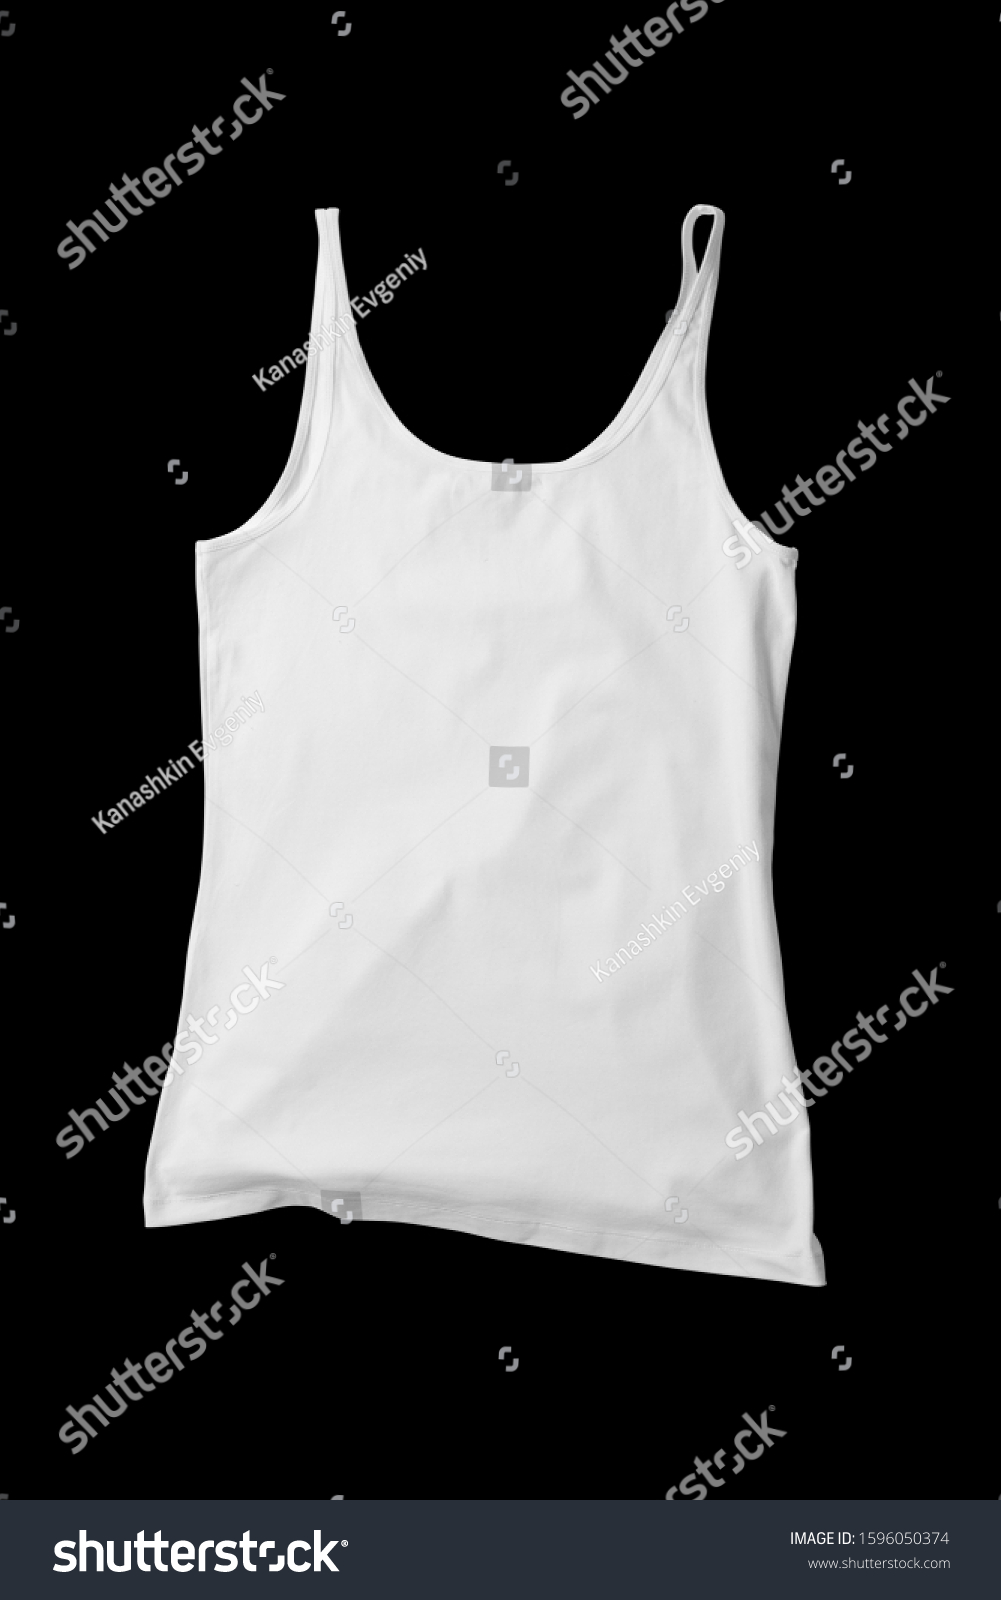 Blank White Womans Sleeveless Shirt Mockup Stock Photo 1596050374 ...